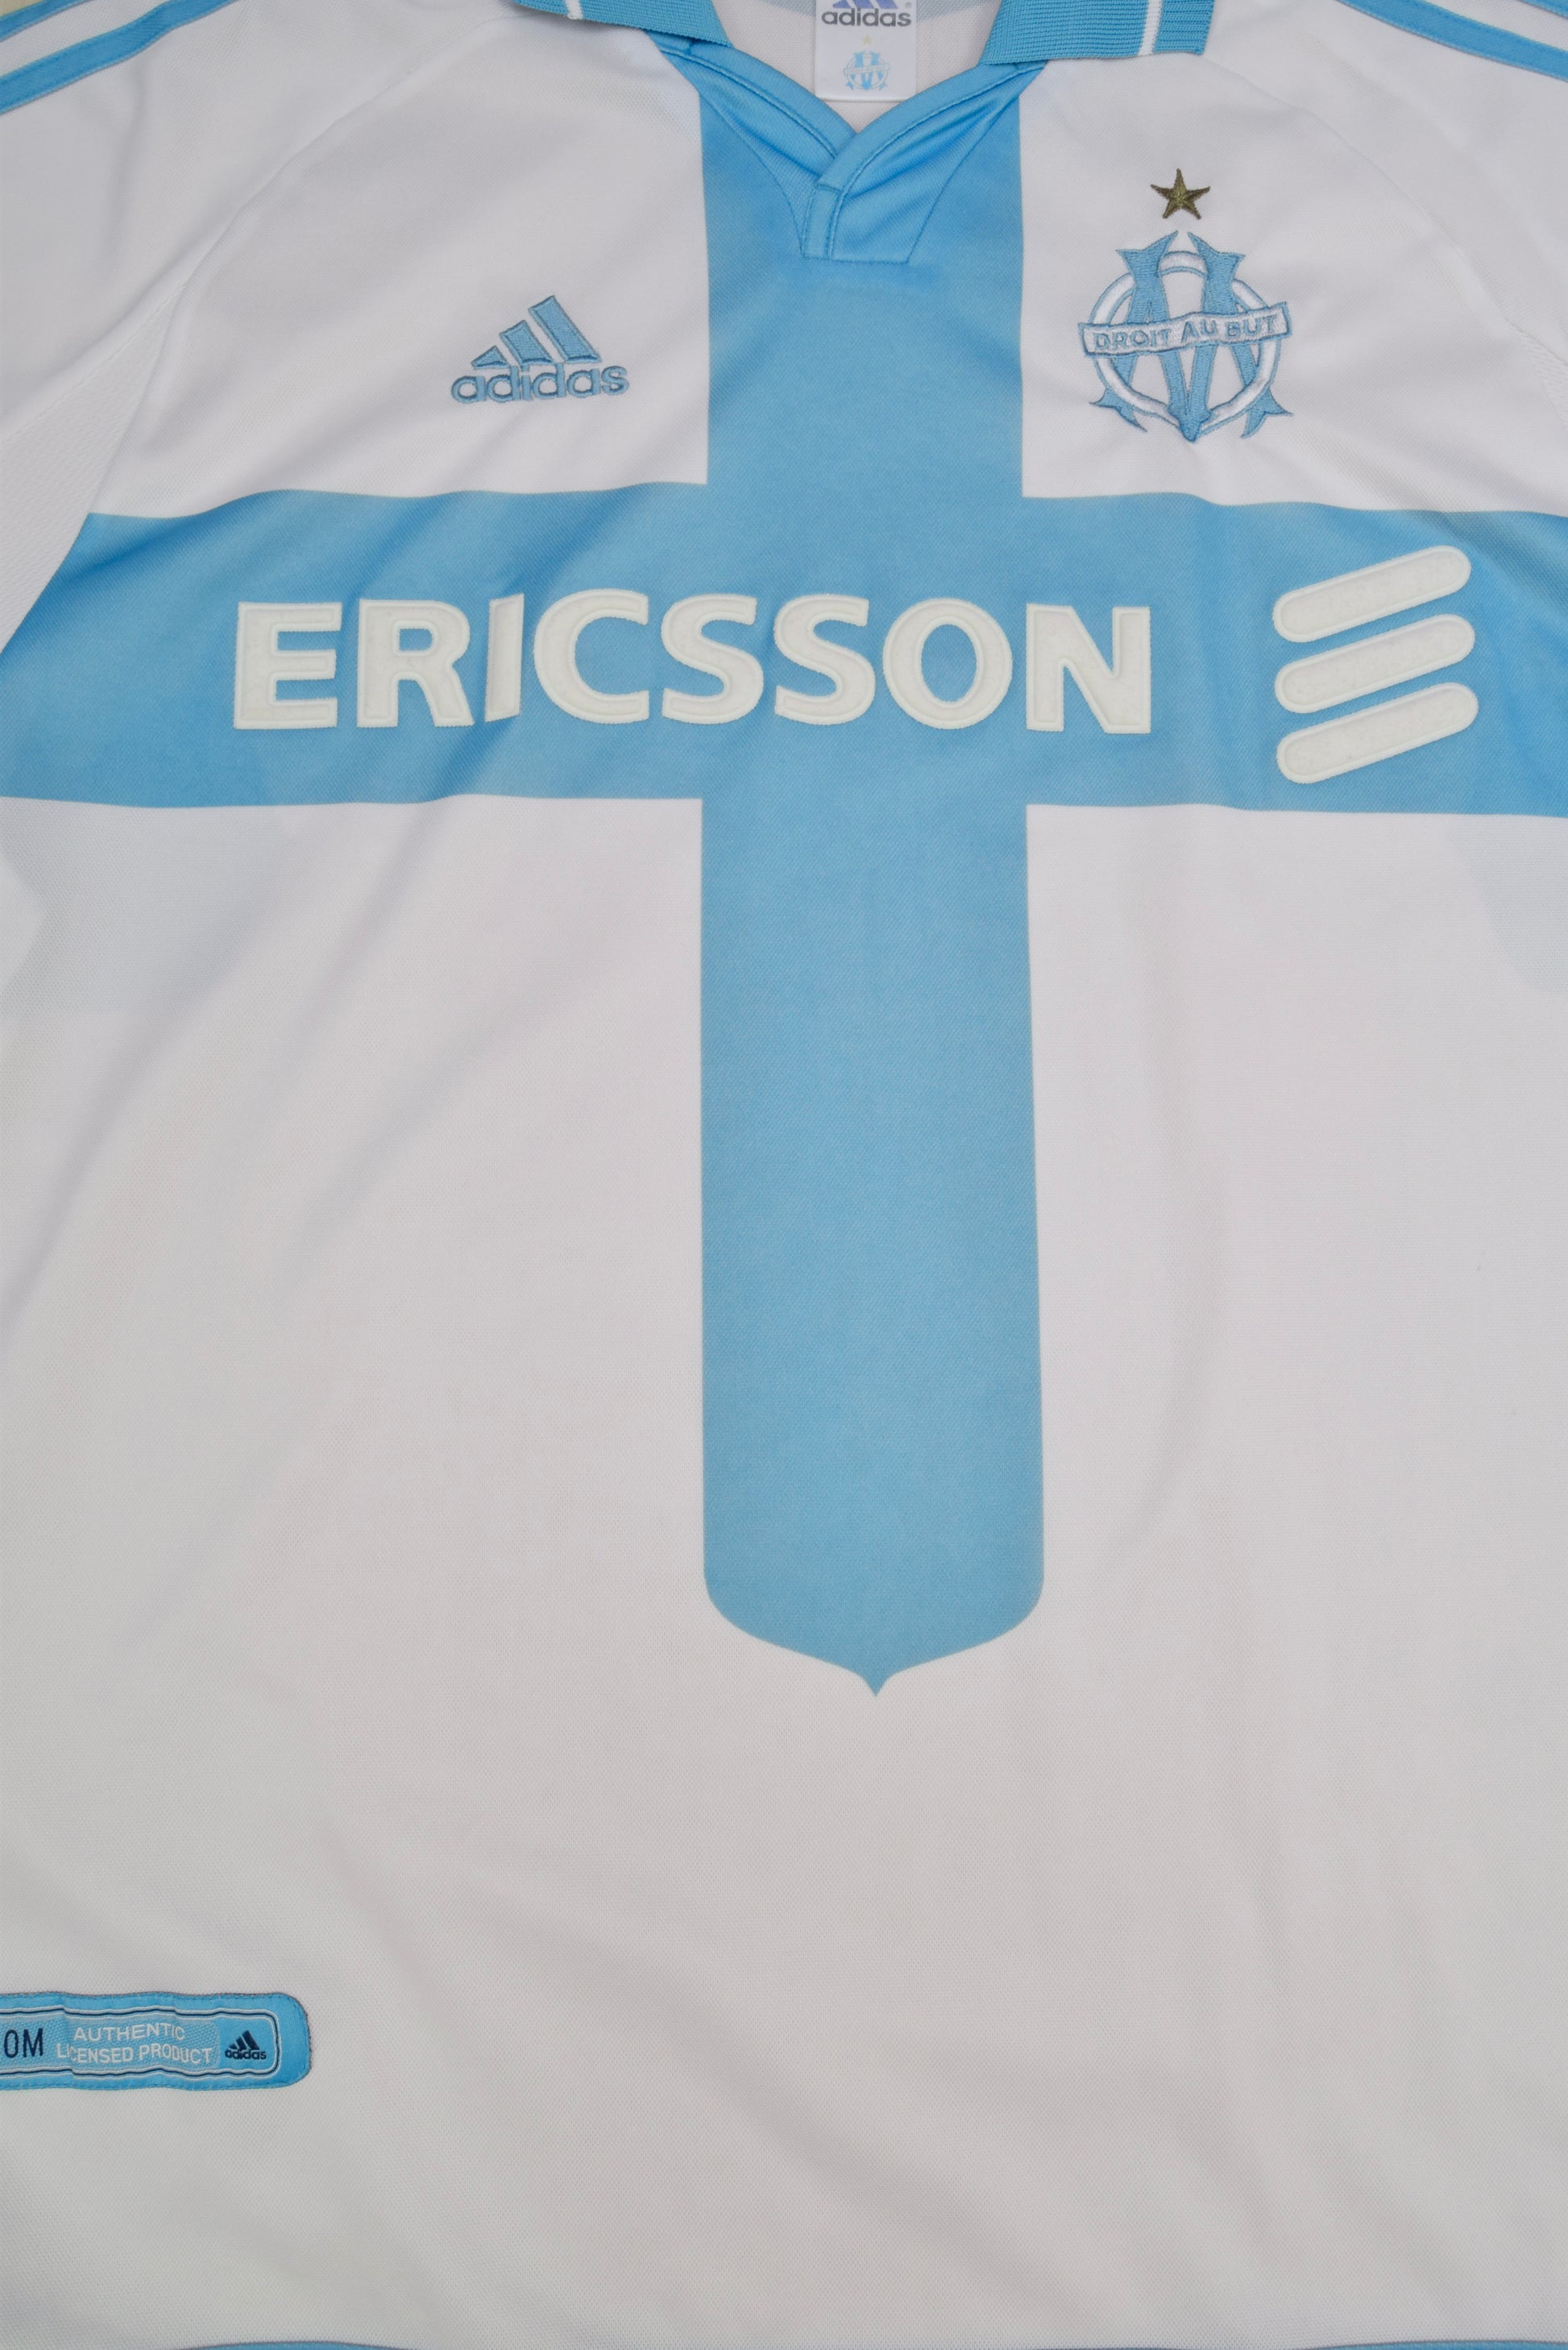 Olimpique Marseille Adidas 2000  2001 2002 Home Football Shirt White Blue Ericsson Size L-XL